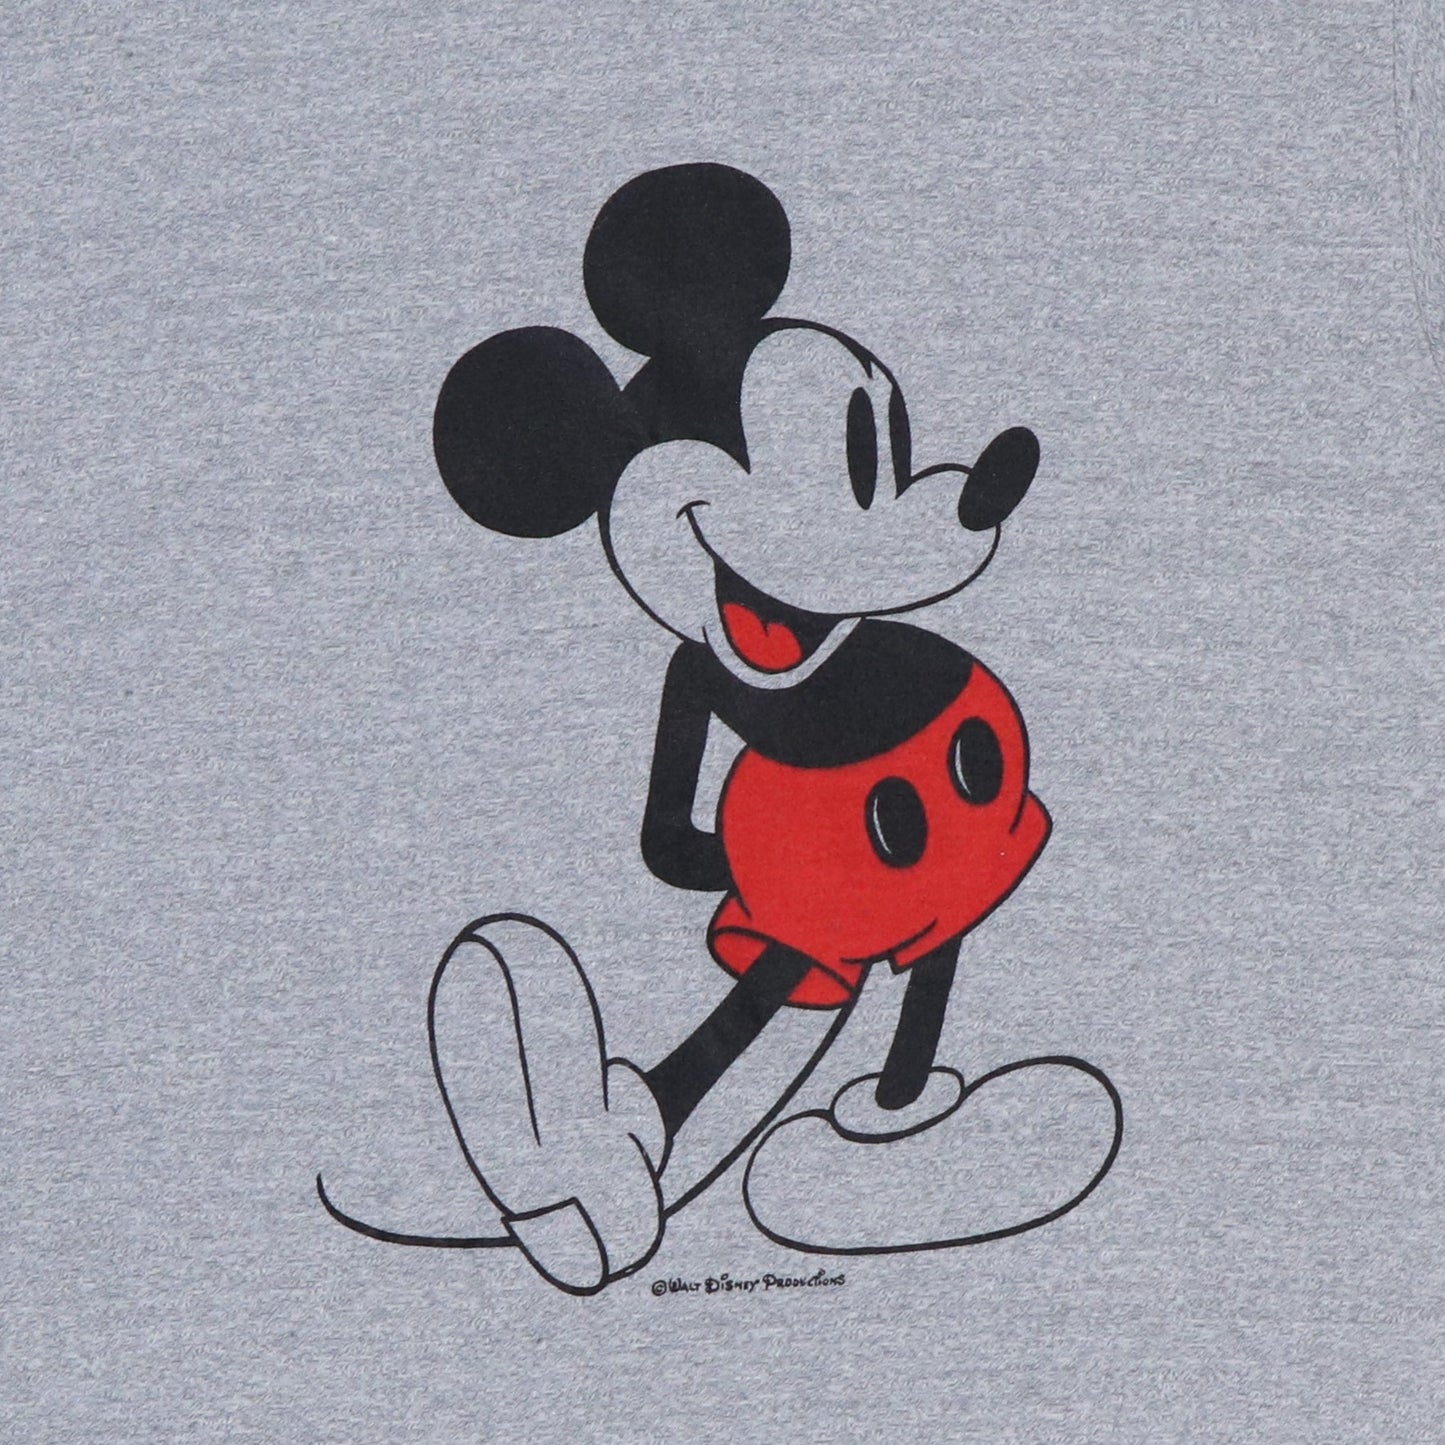 1980s Disney Mickey Mouse Shirt